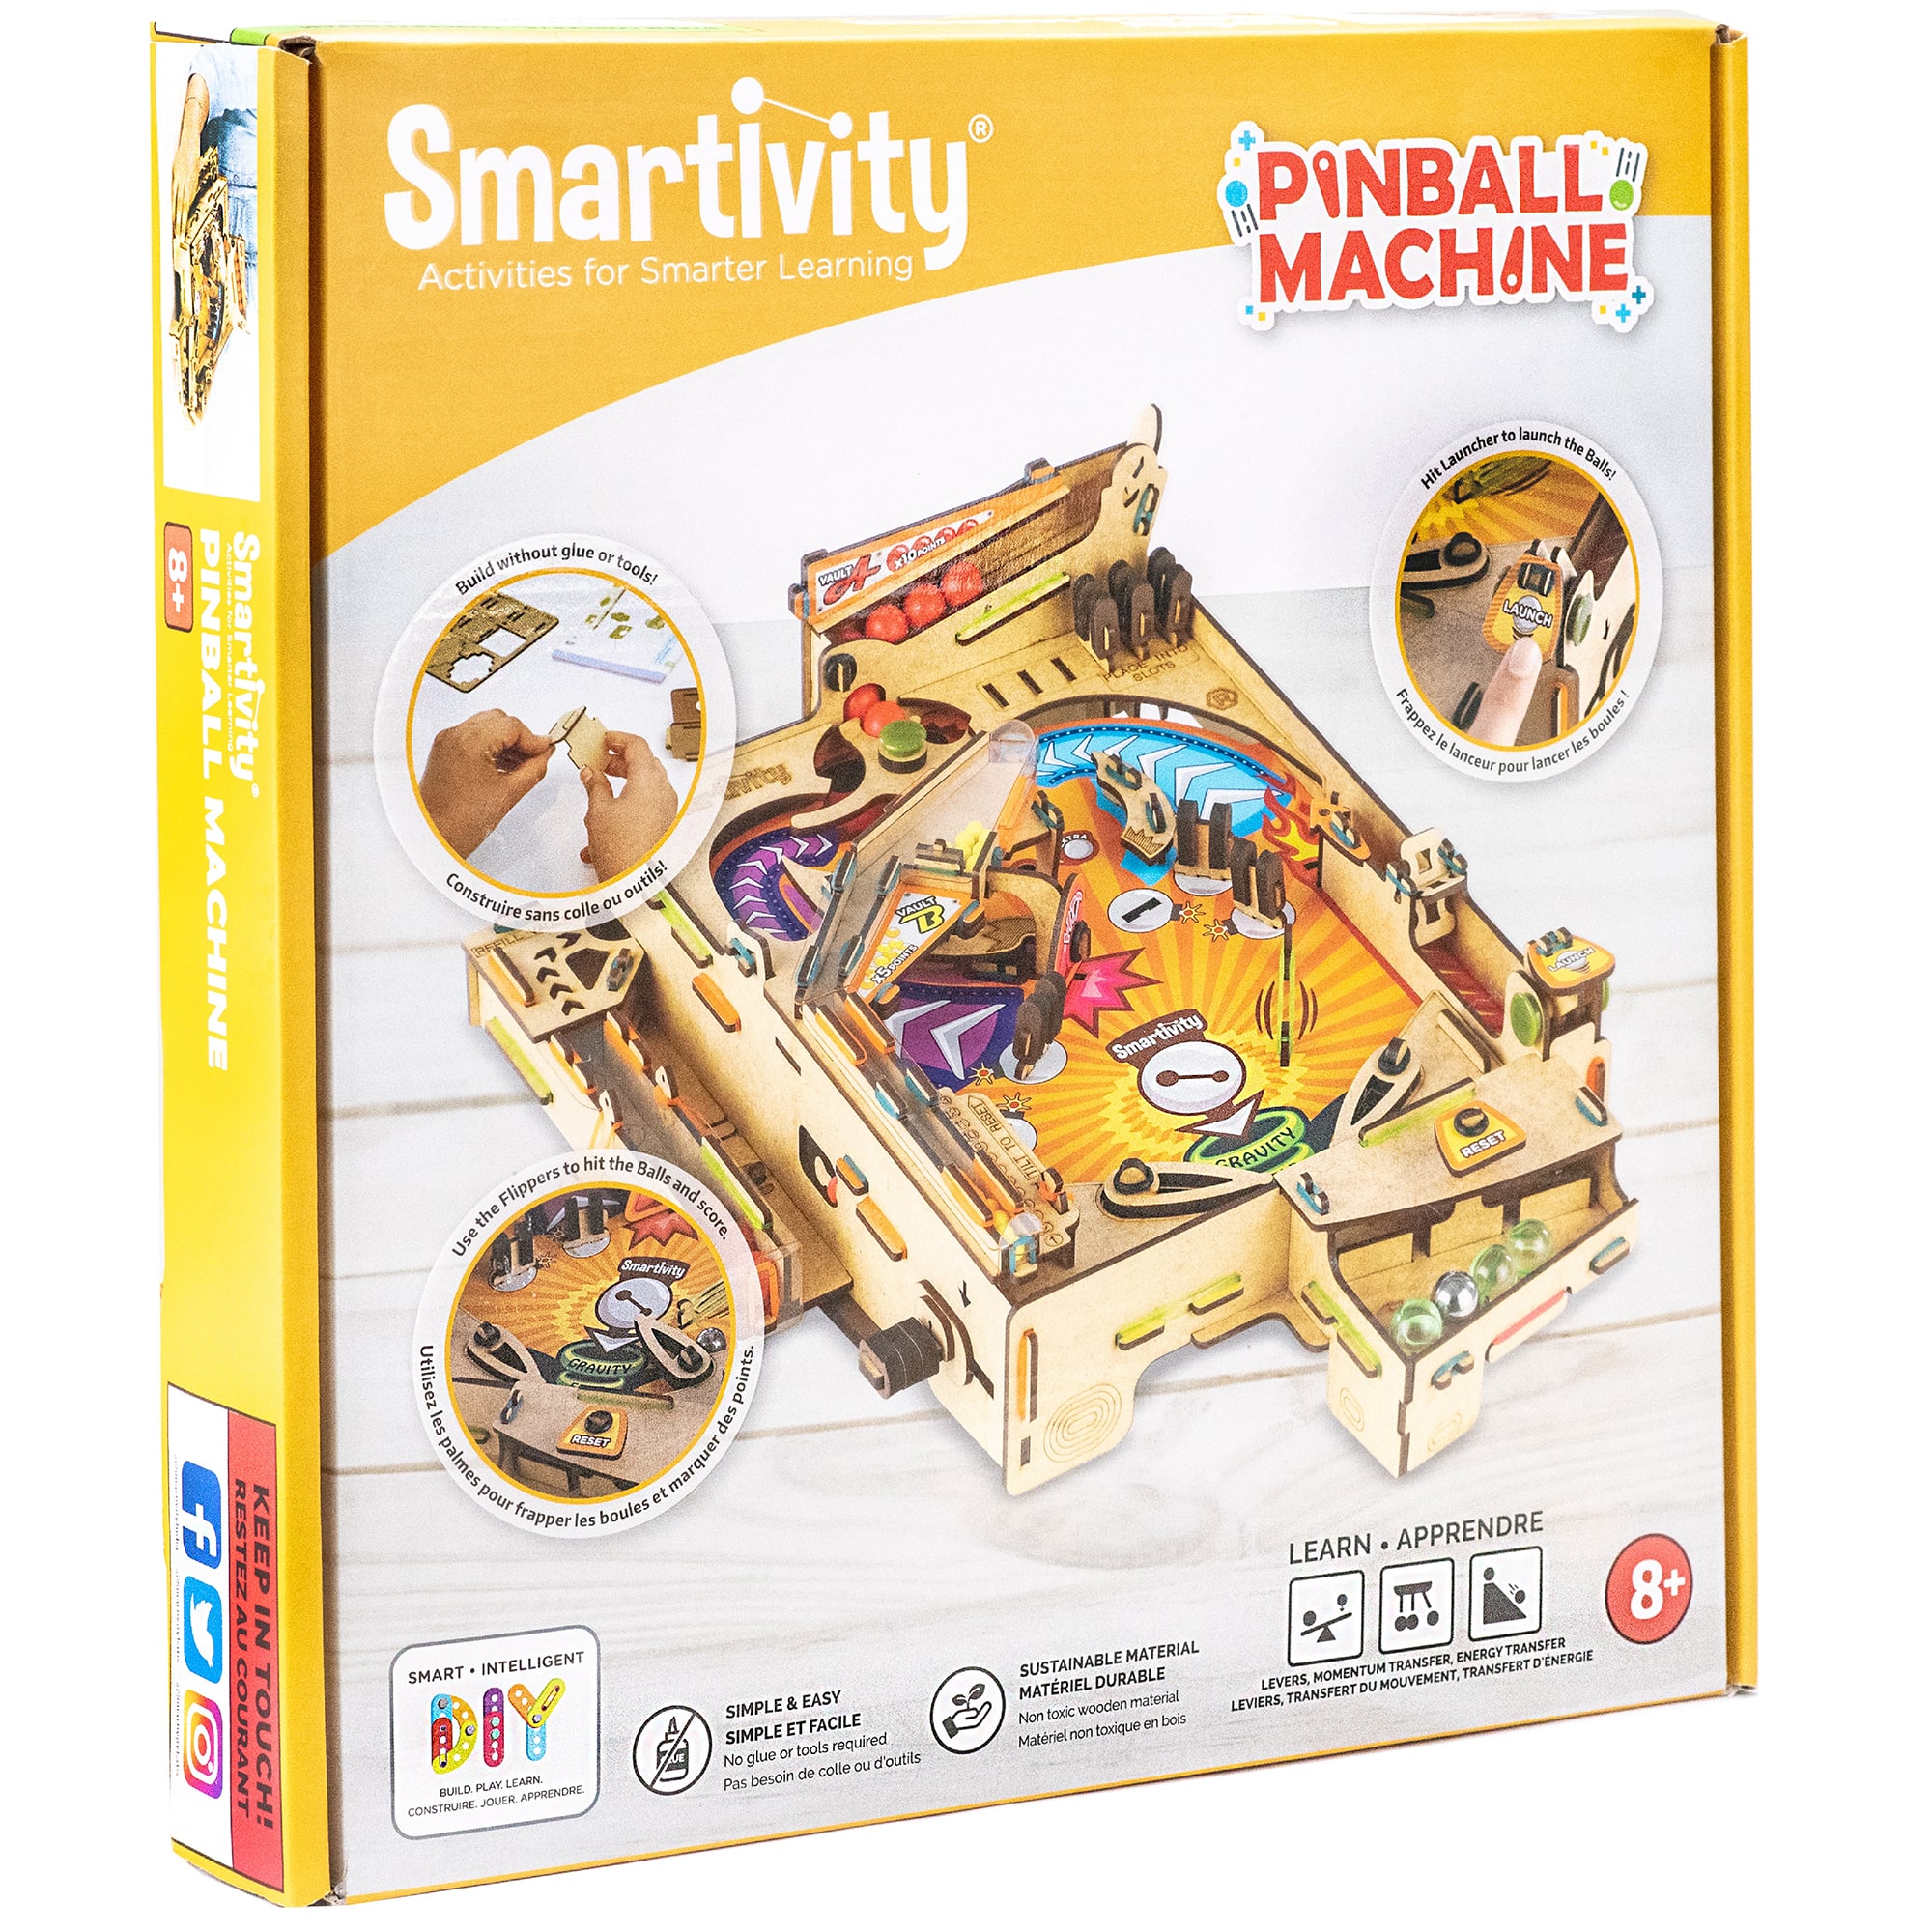 Elenco Smartivity DIY Toy Tabletop Pinball Machine